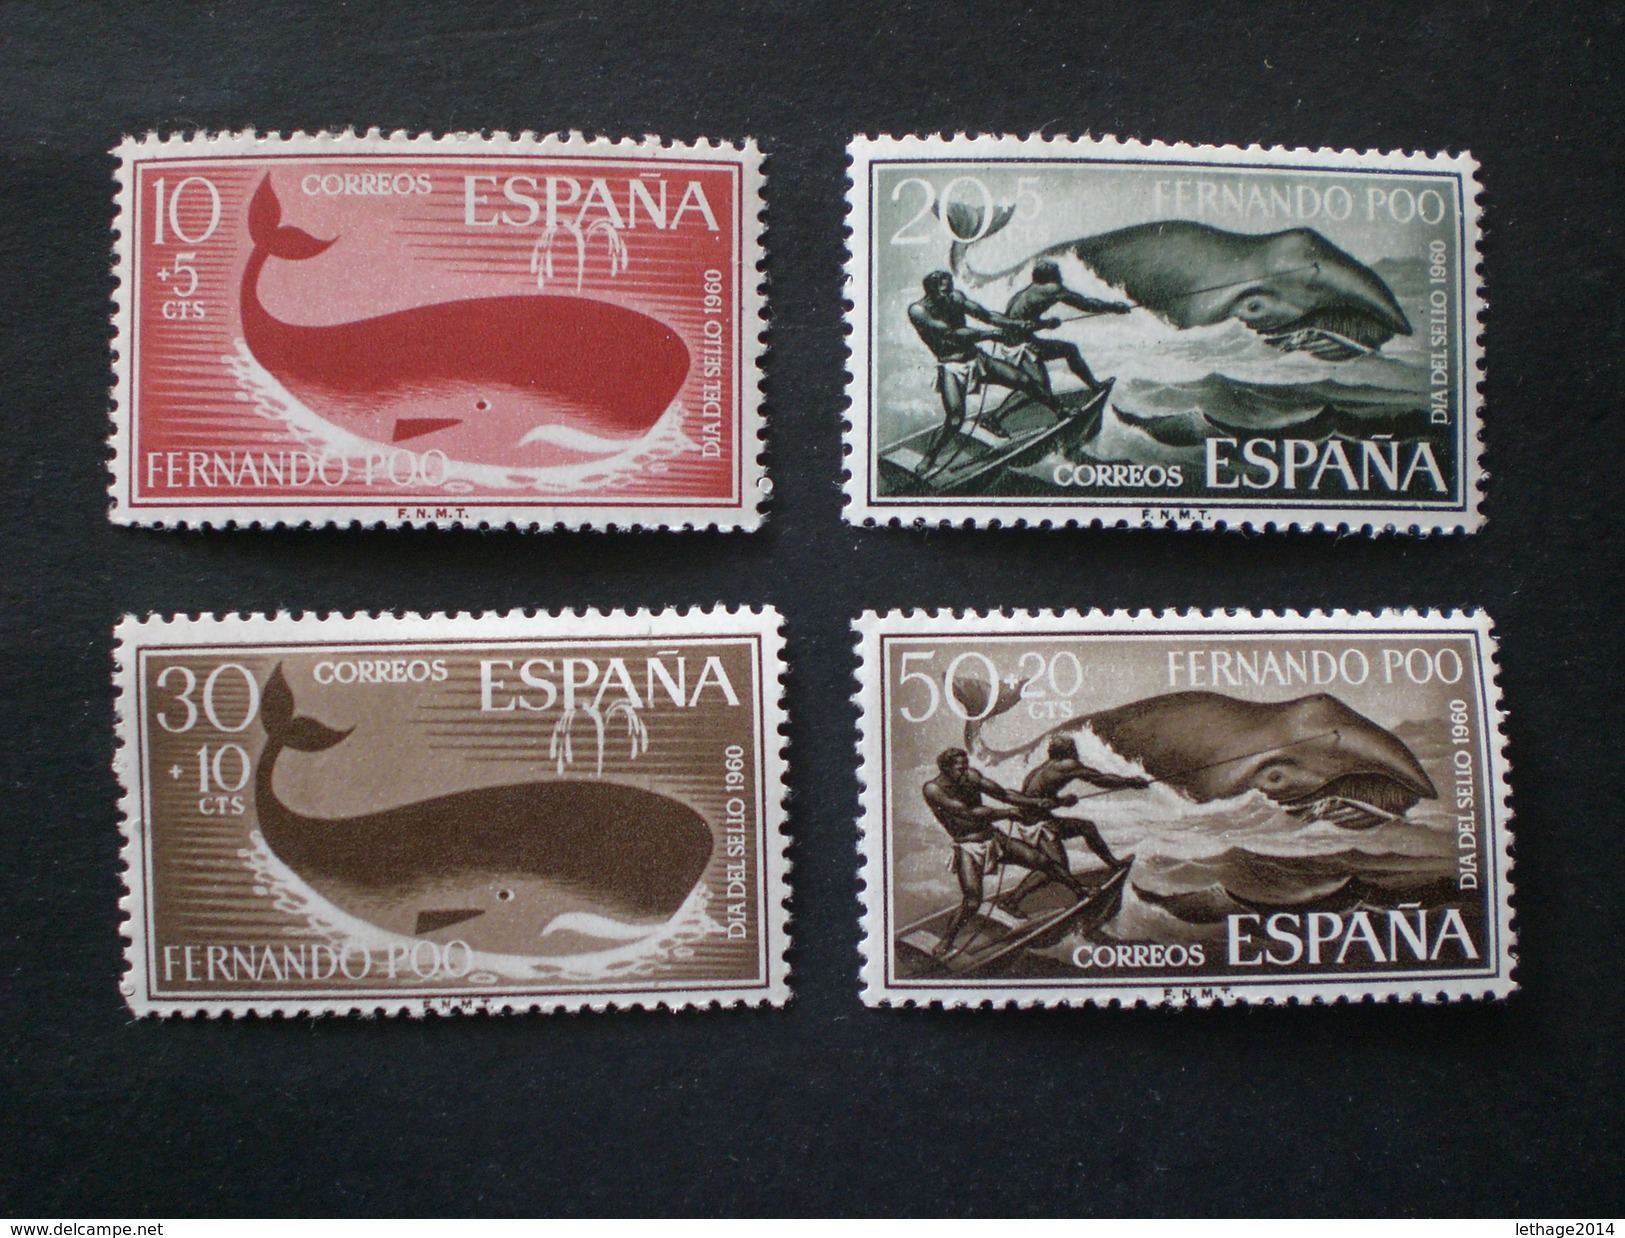 FERNANDO POO 1960 Stamp Day MVLH - Fernando Poo